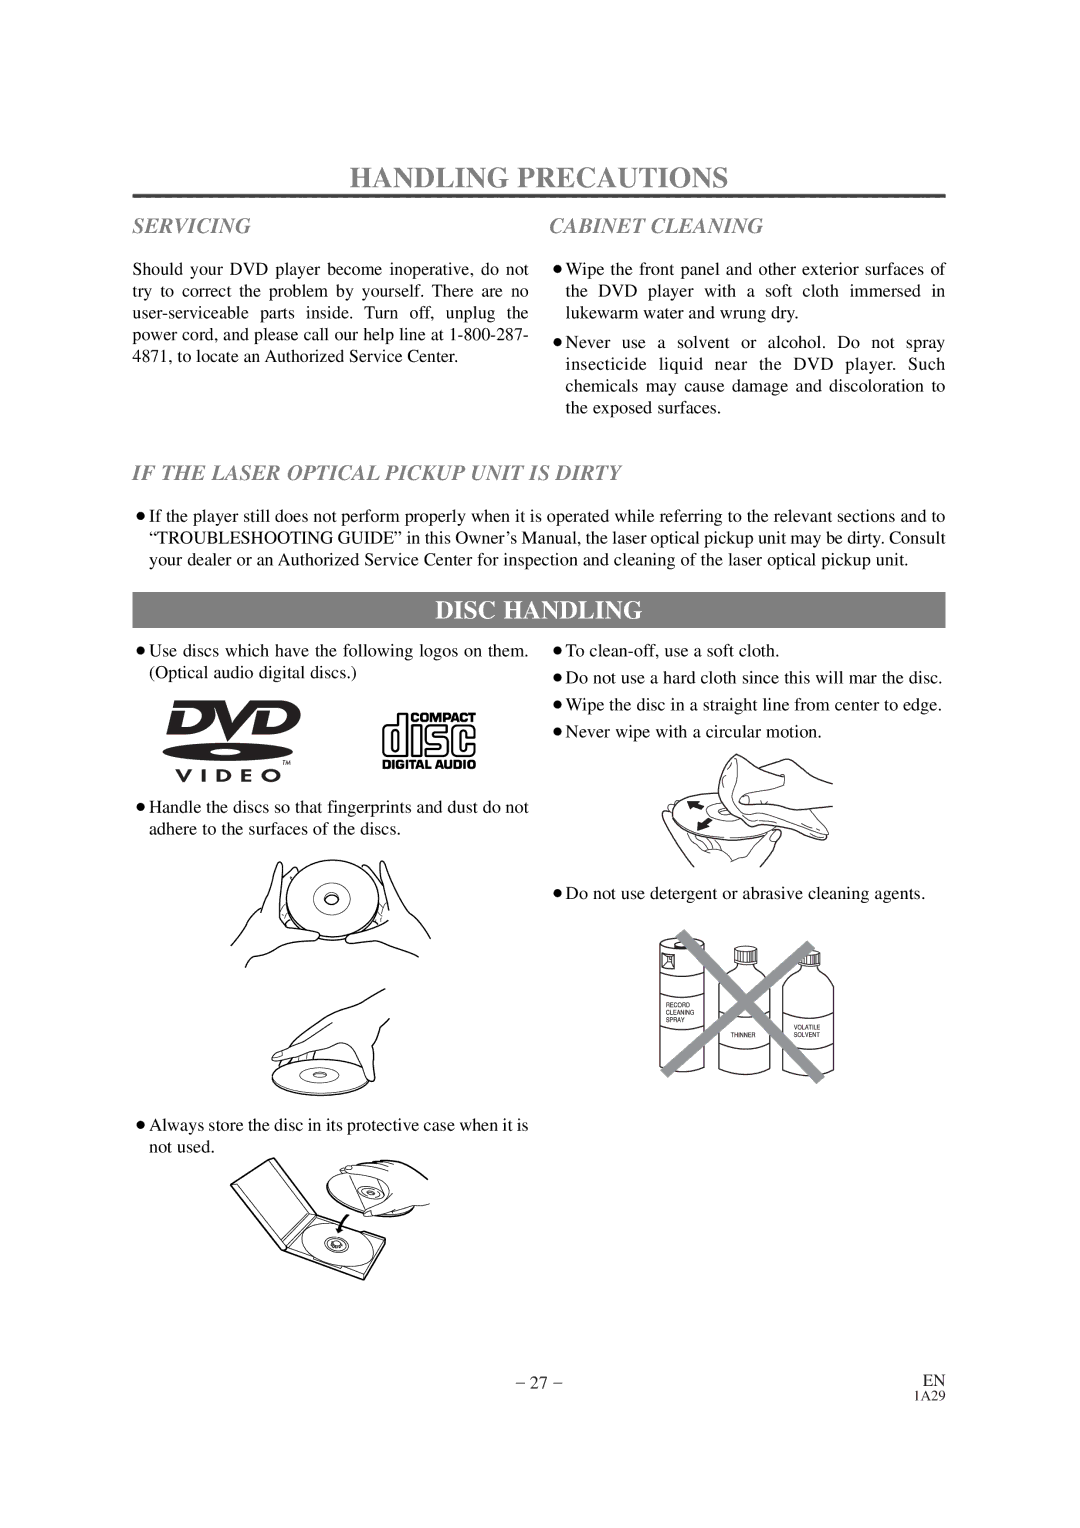 Sylvania DVL100CB owner manual Handling Precautions, Disc Handling 